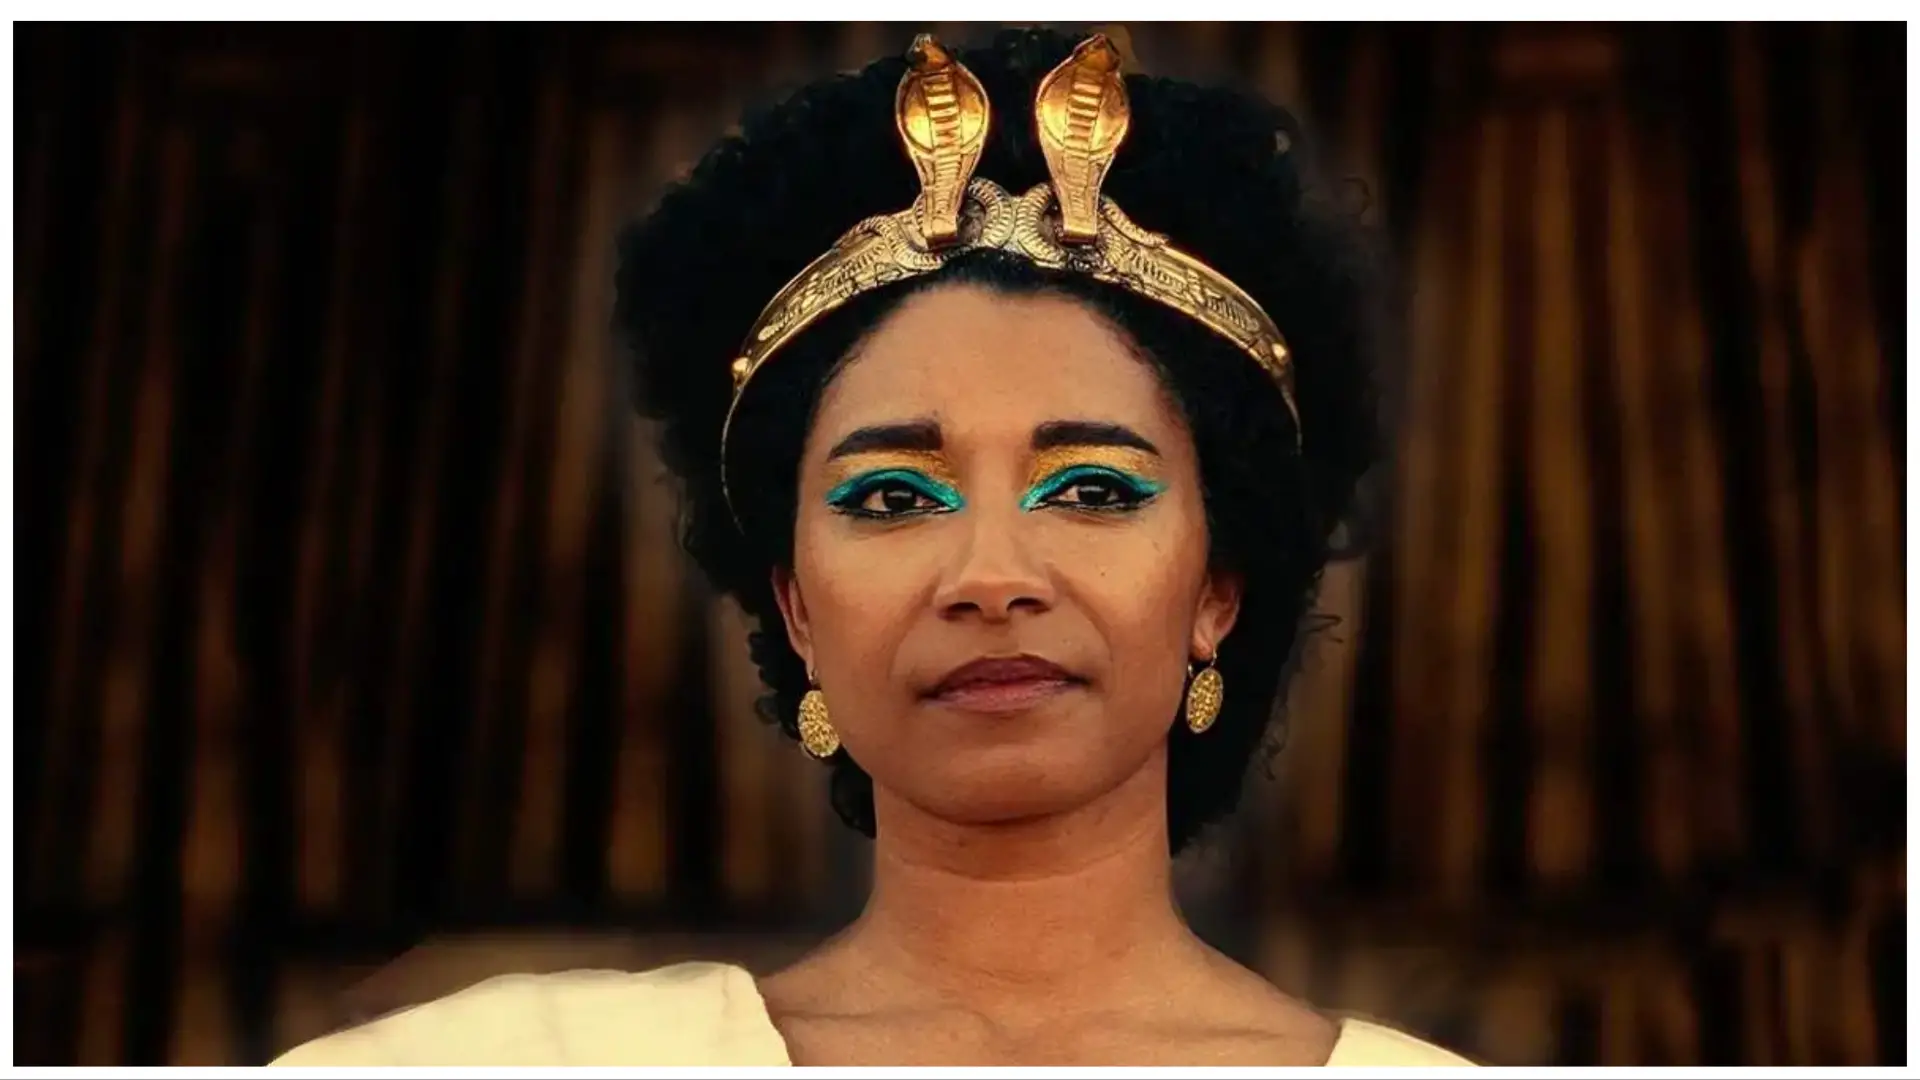 Is Queen Cleopatra Season 2 possible?